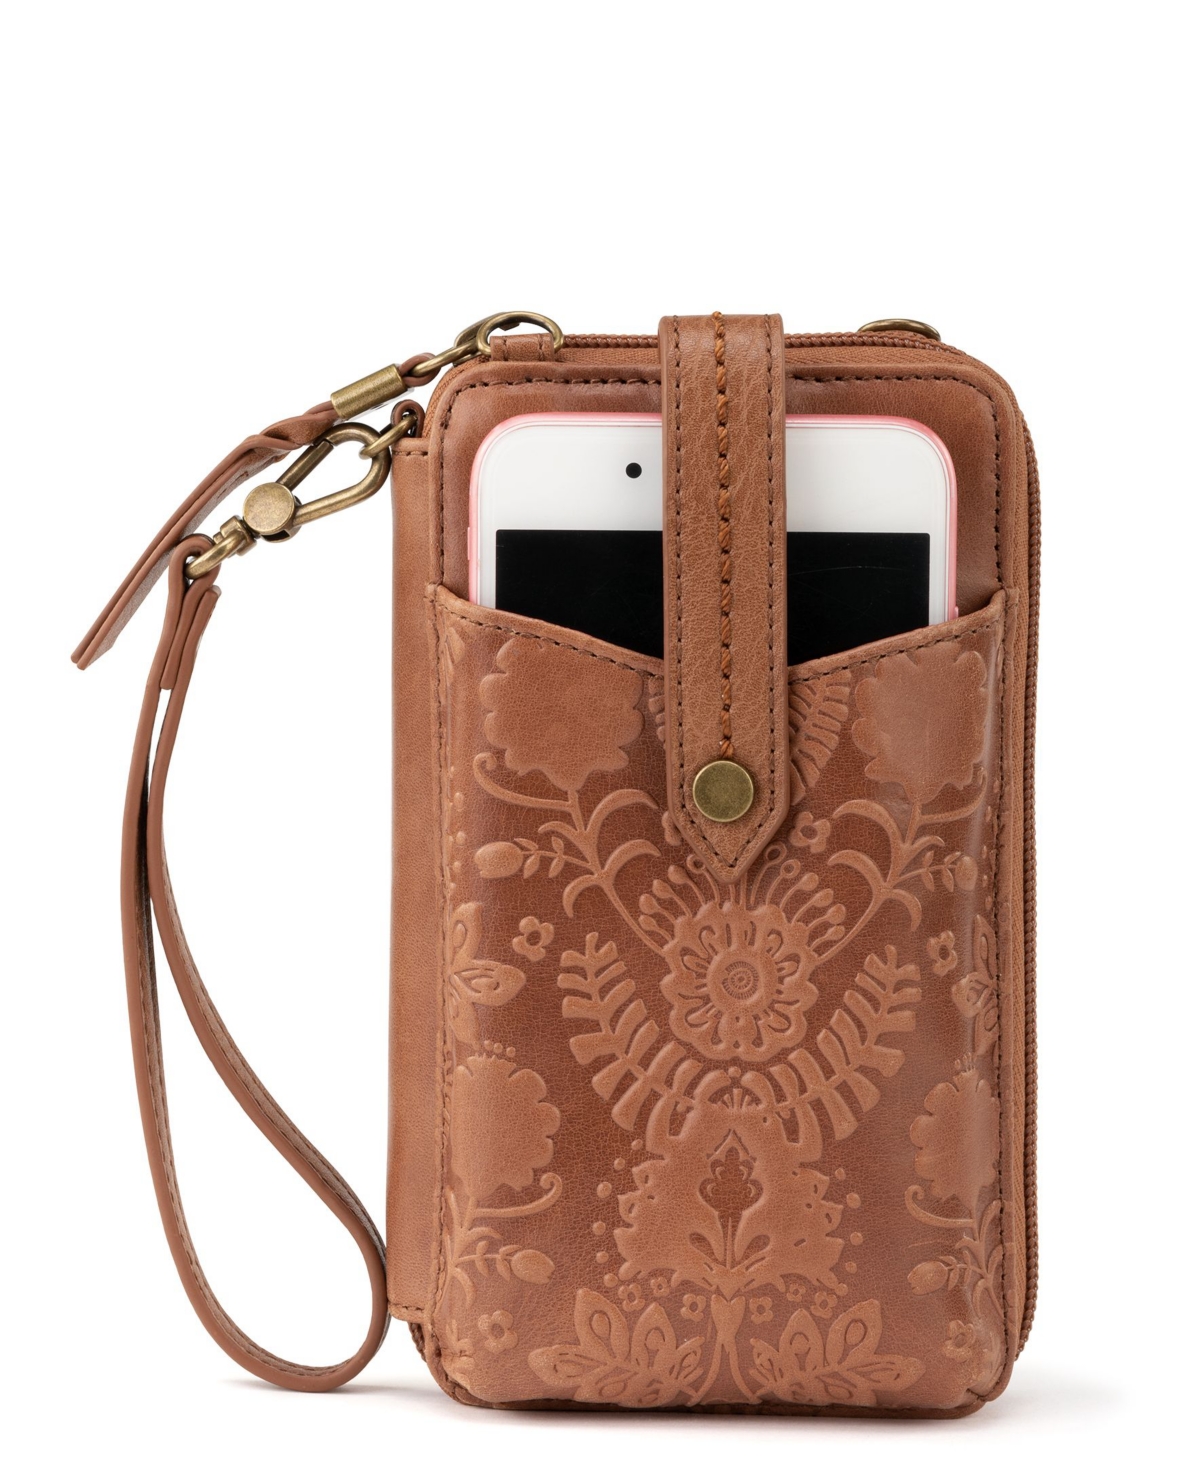 Women's Silverlake Smartphone Crossbody Handbag - Tobacco Floral Embossed